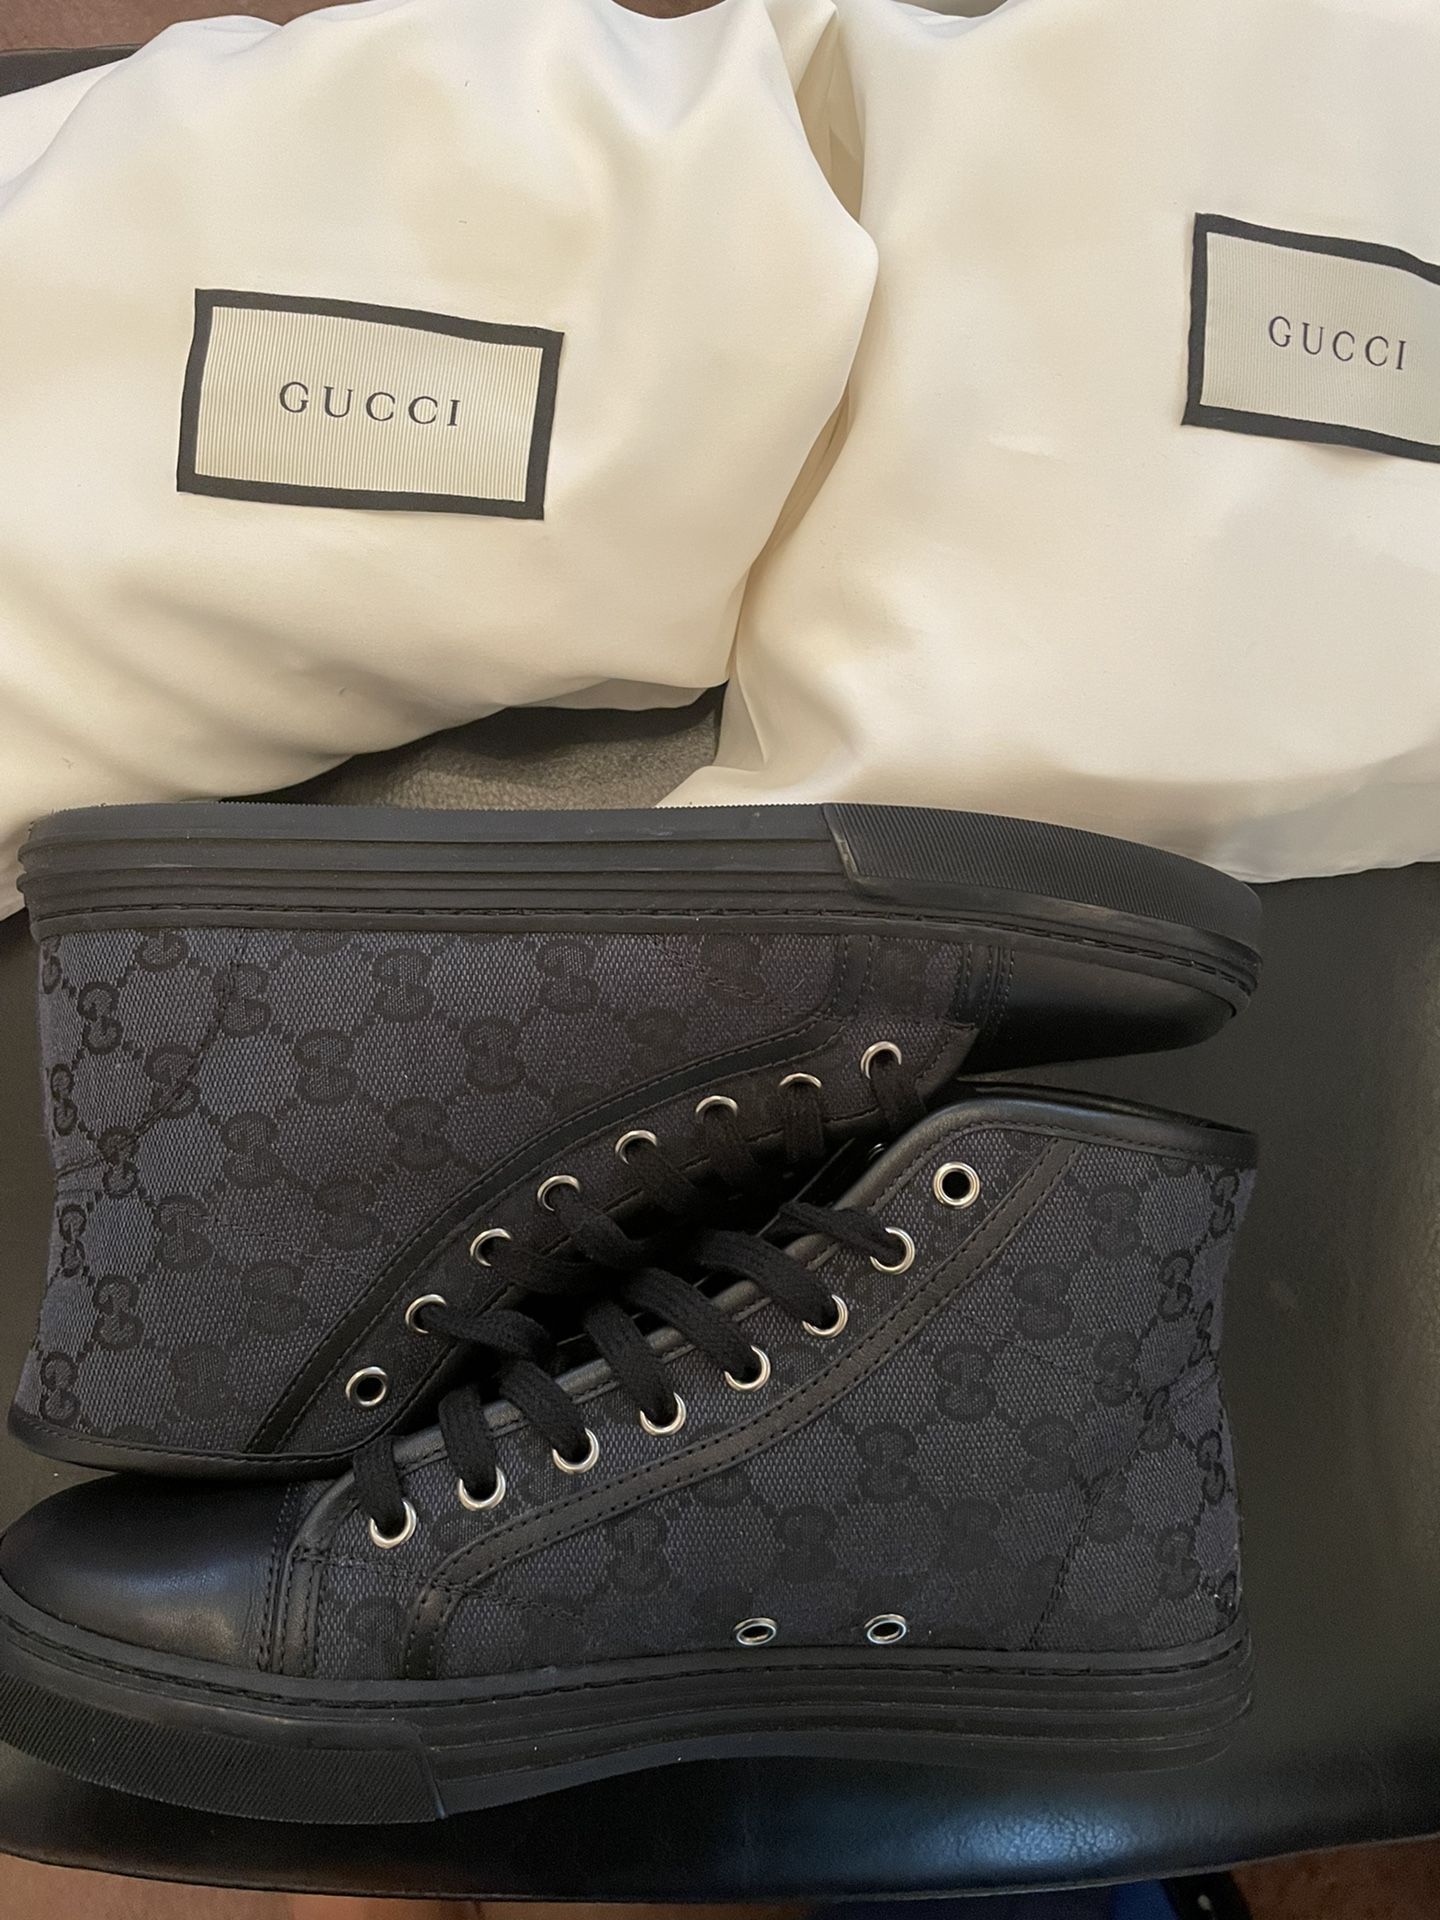 Designer Gucci Shoes